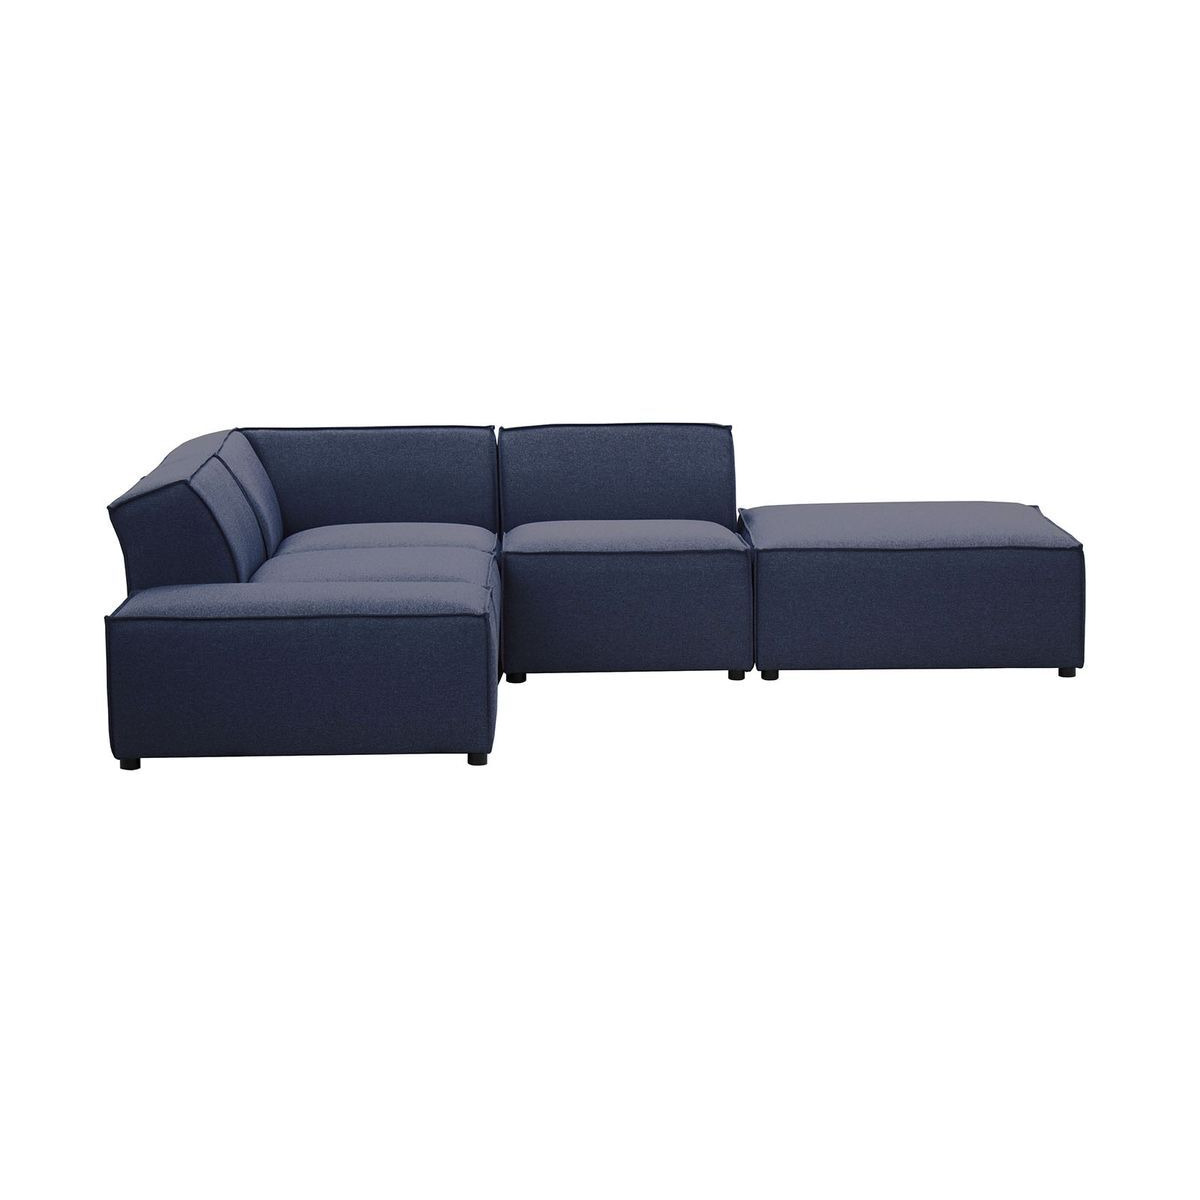 Mojo Modular Corner Sofa, navy blue - image 1